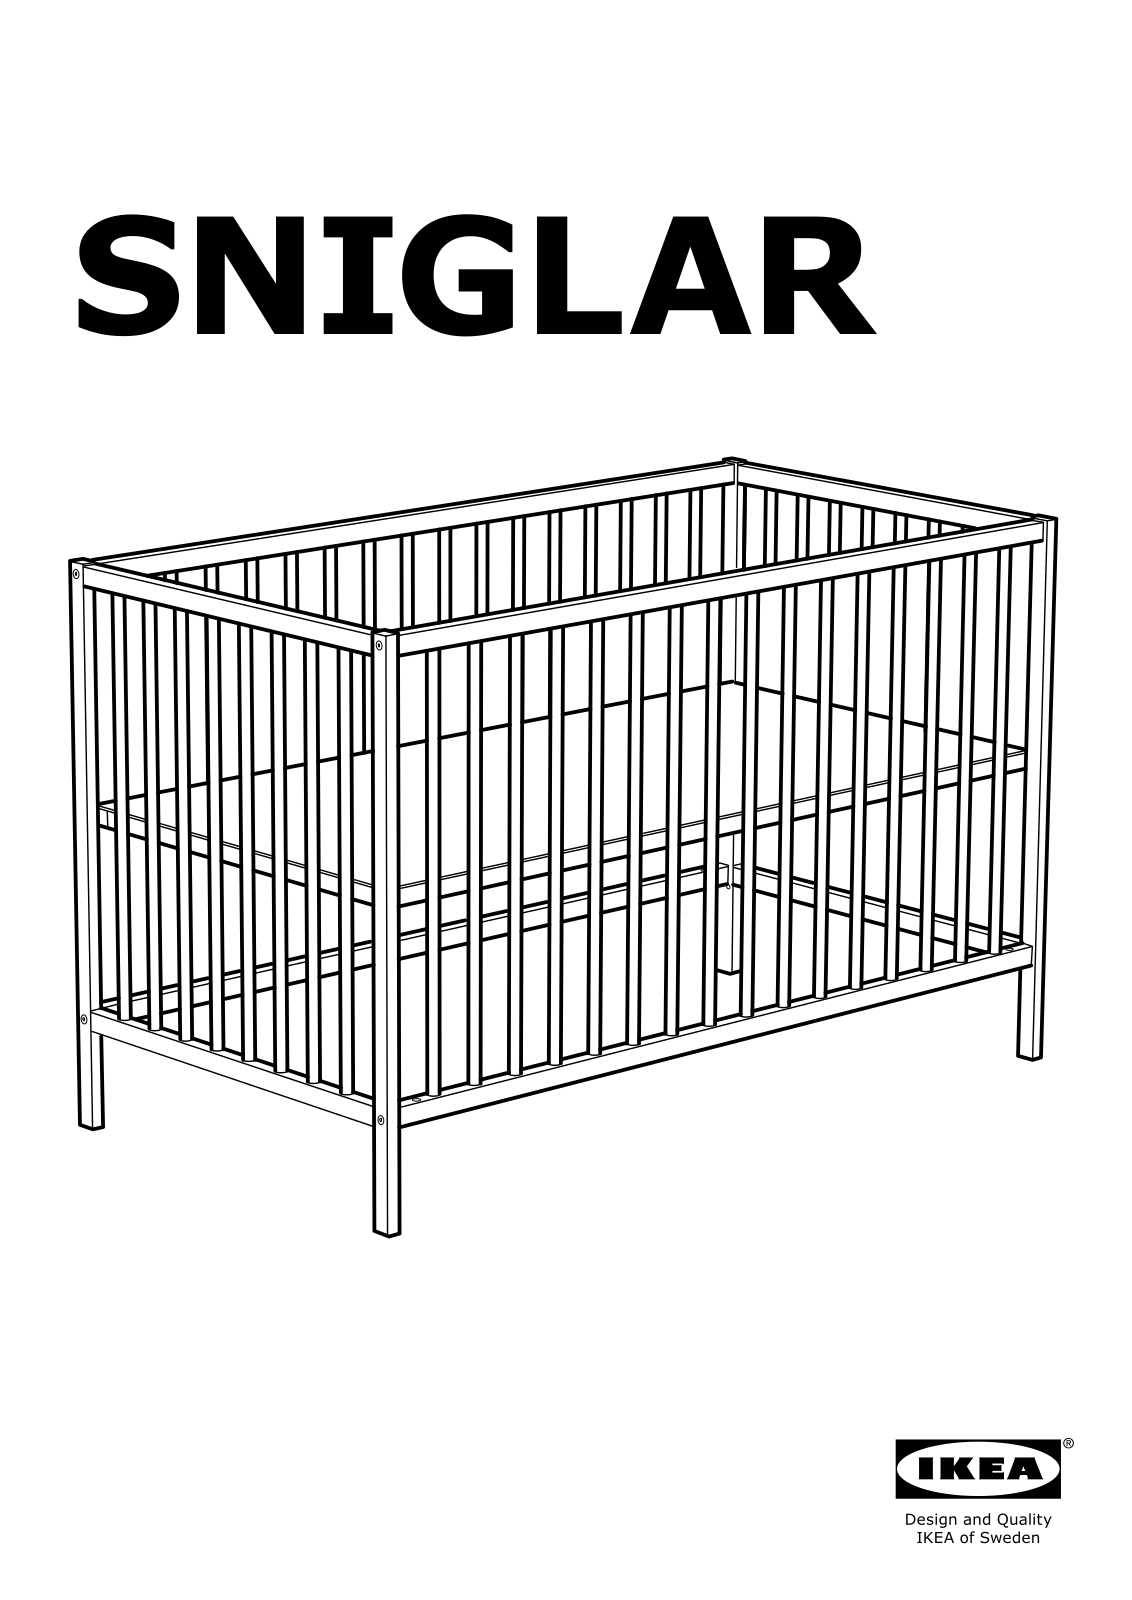 IKEA SNIGLAR User Manual